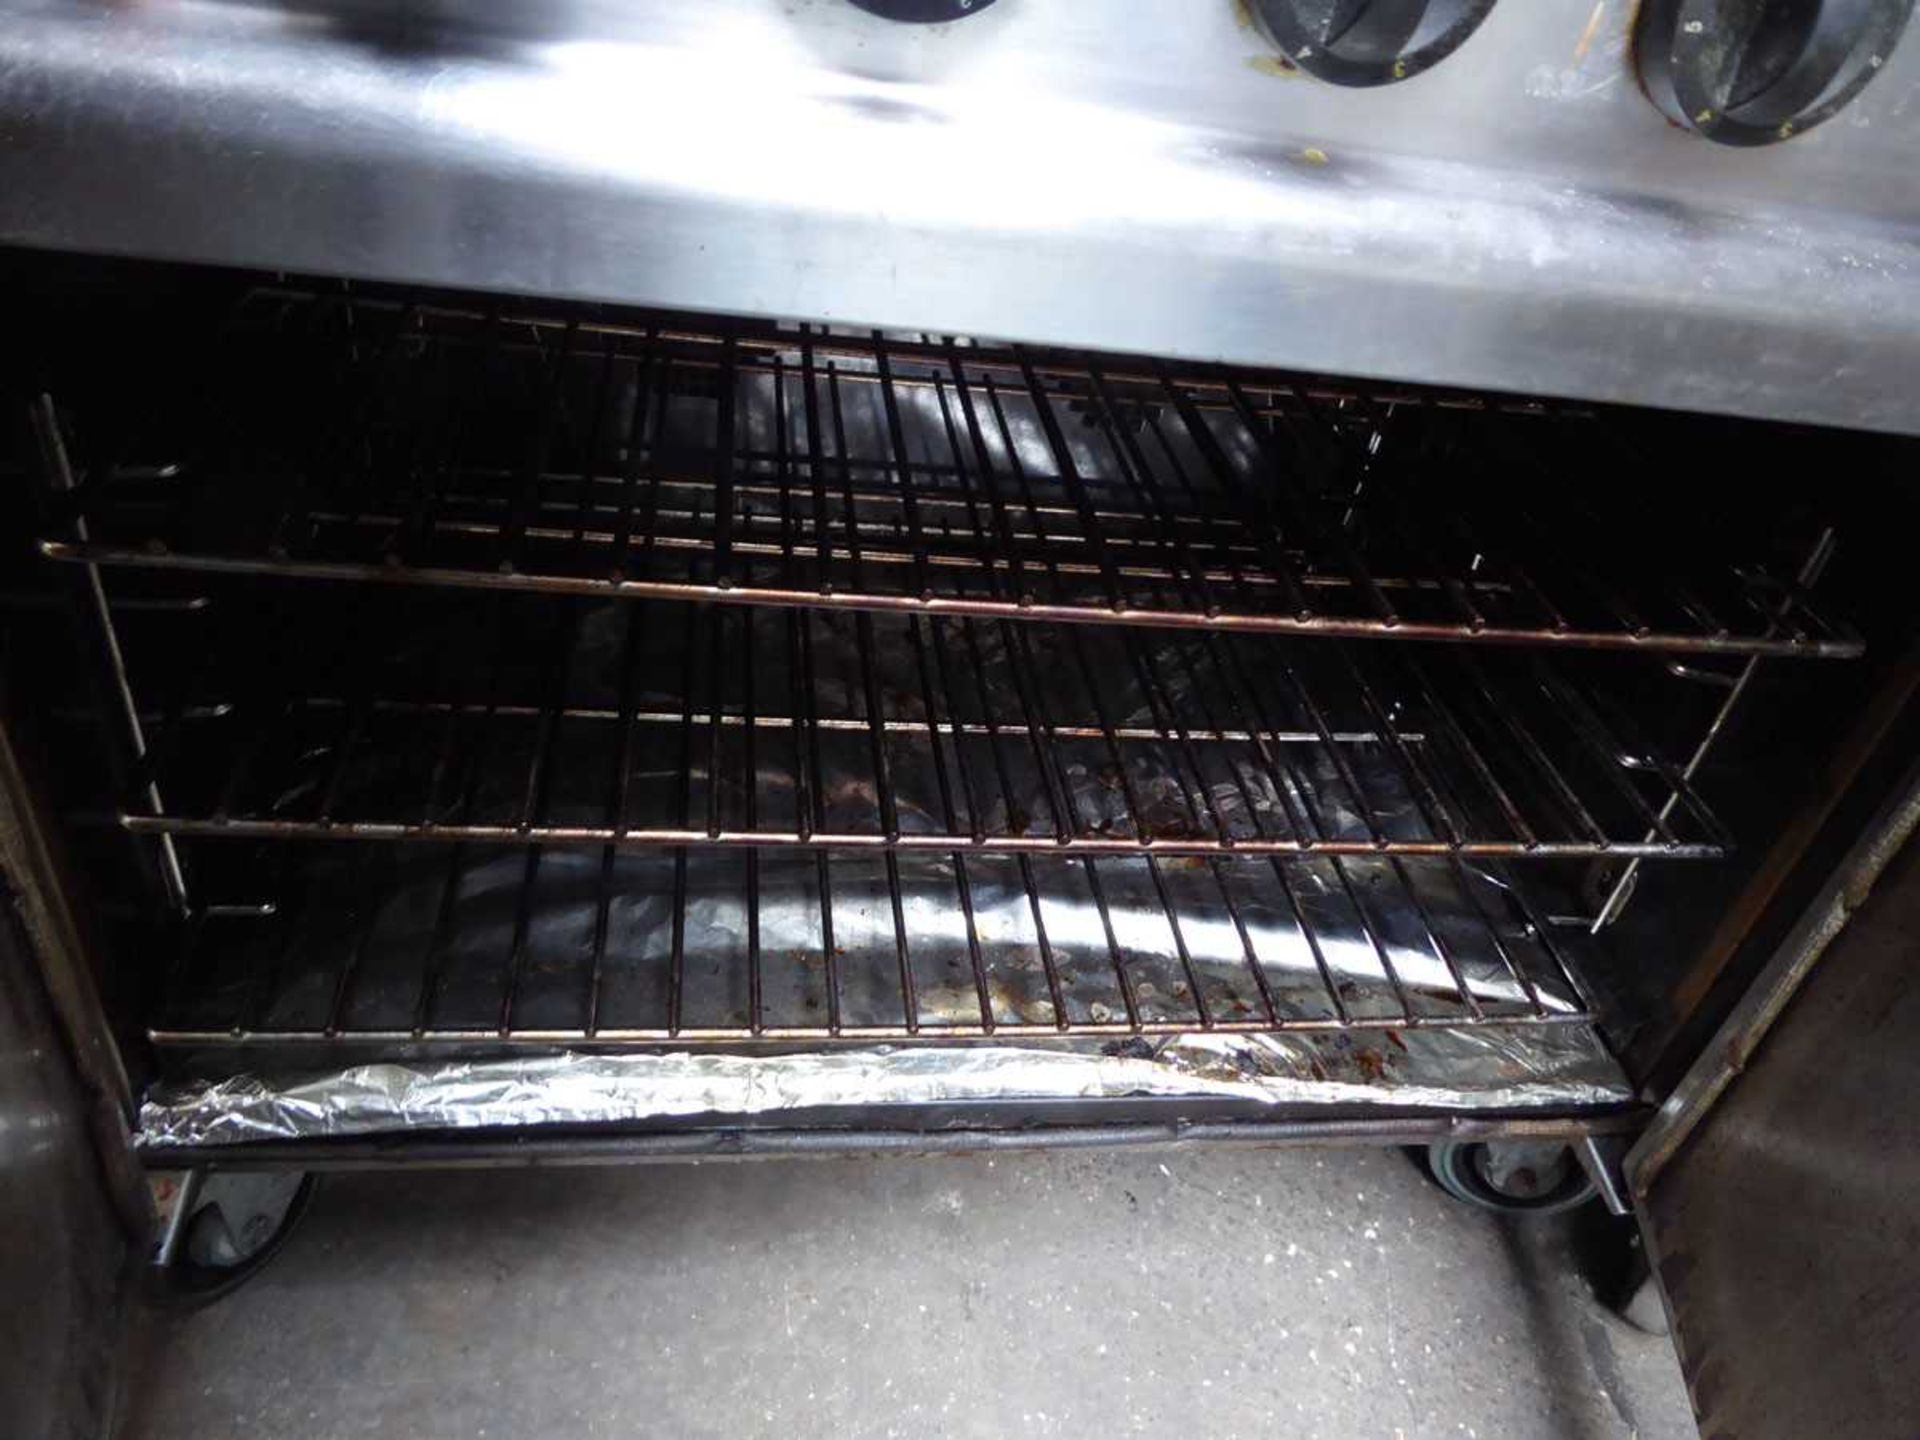 90cm electric Lincat 6 ring cooker with 2 door oven under - Image 3 of 3